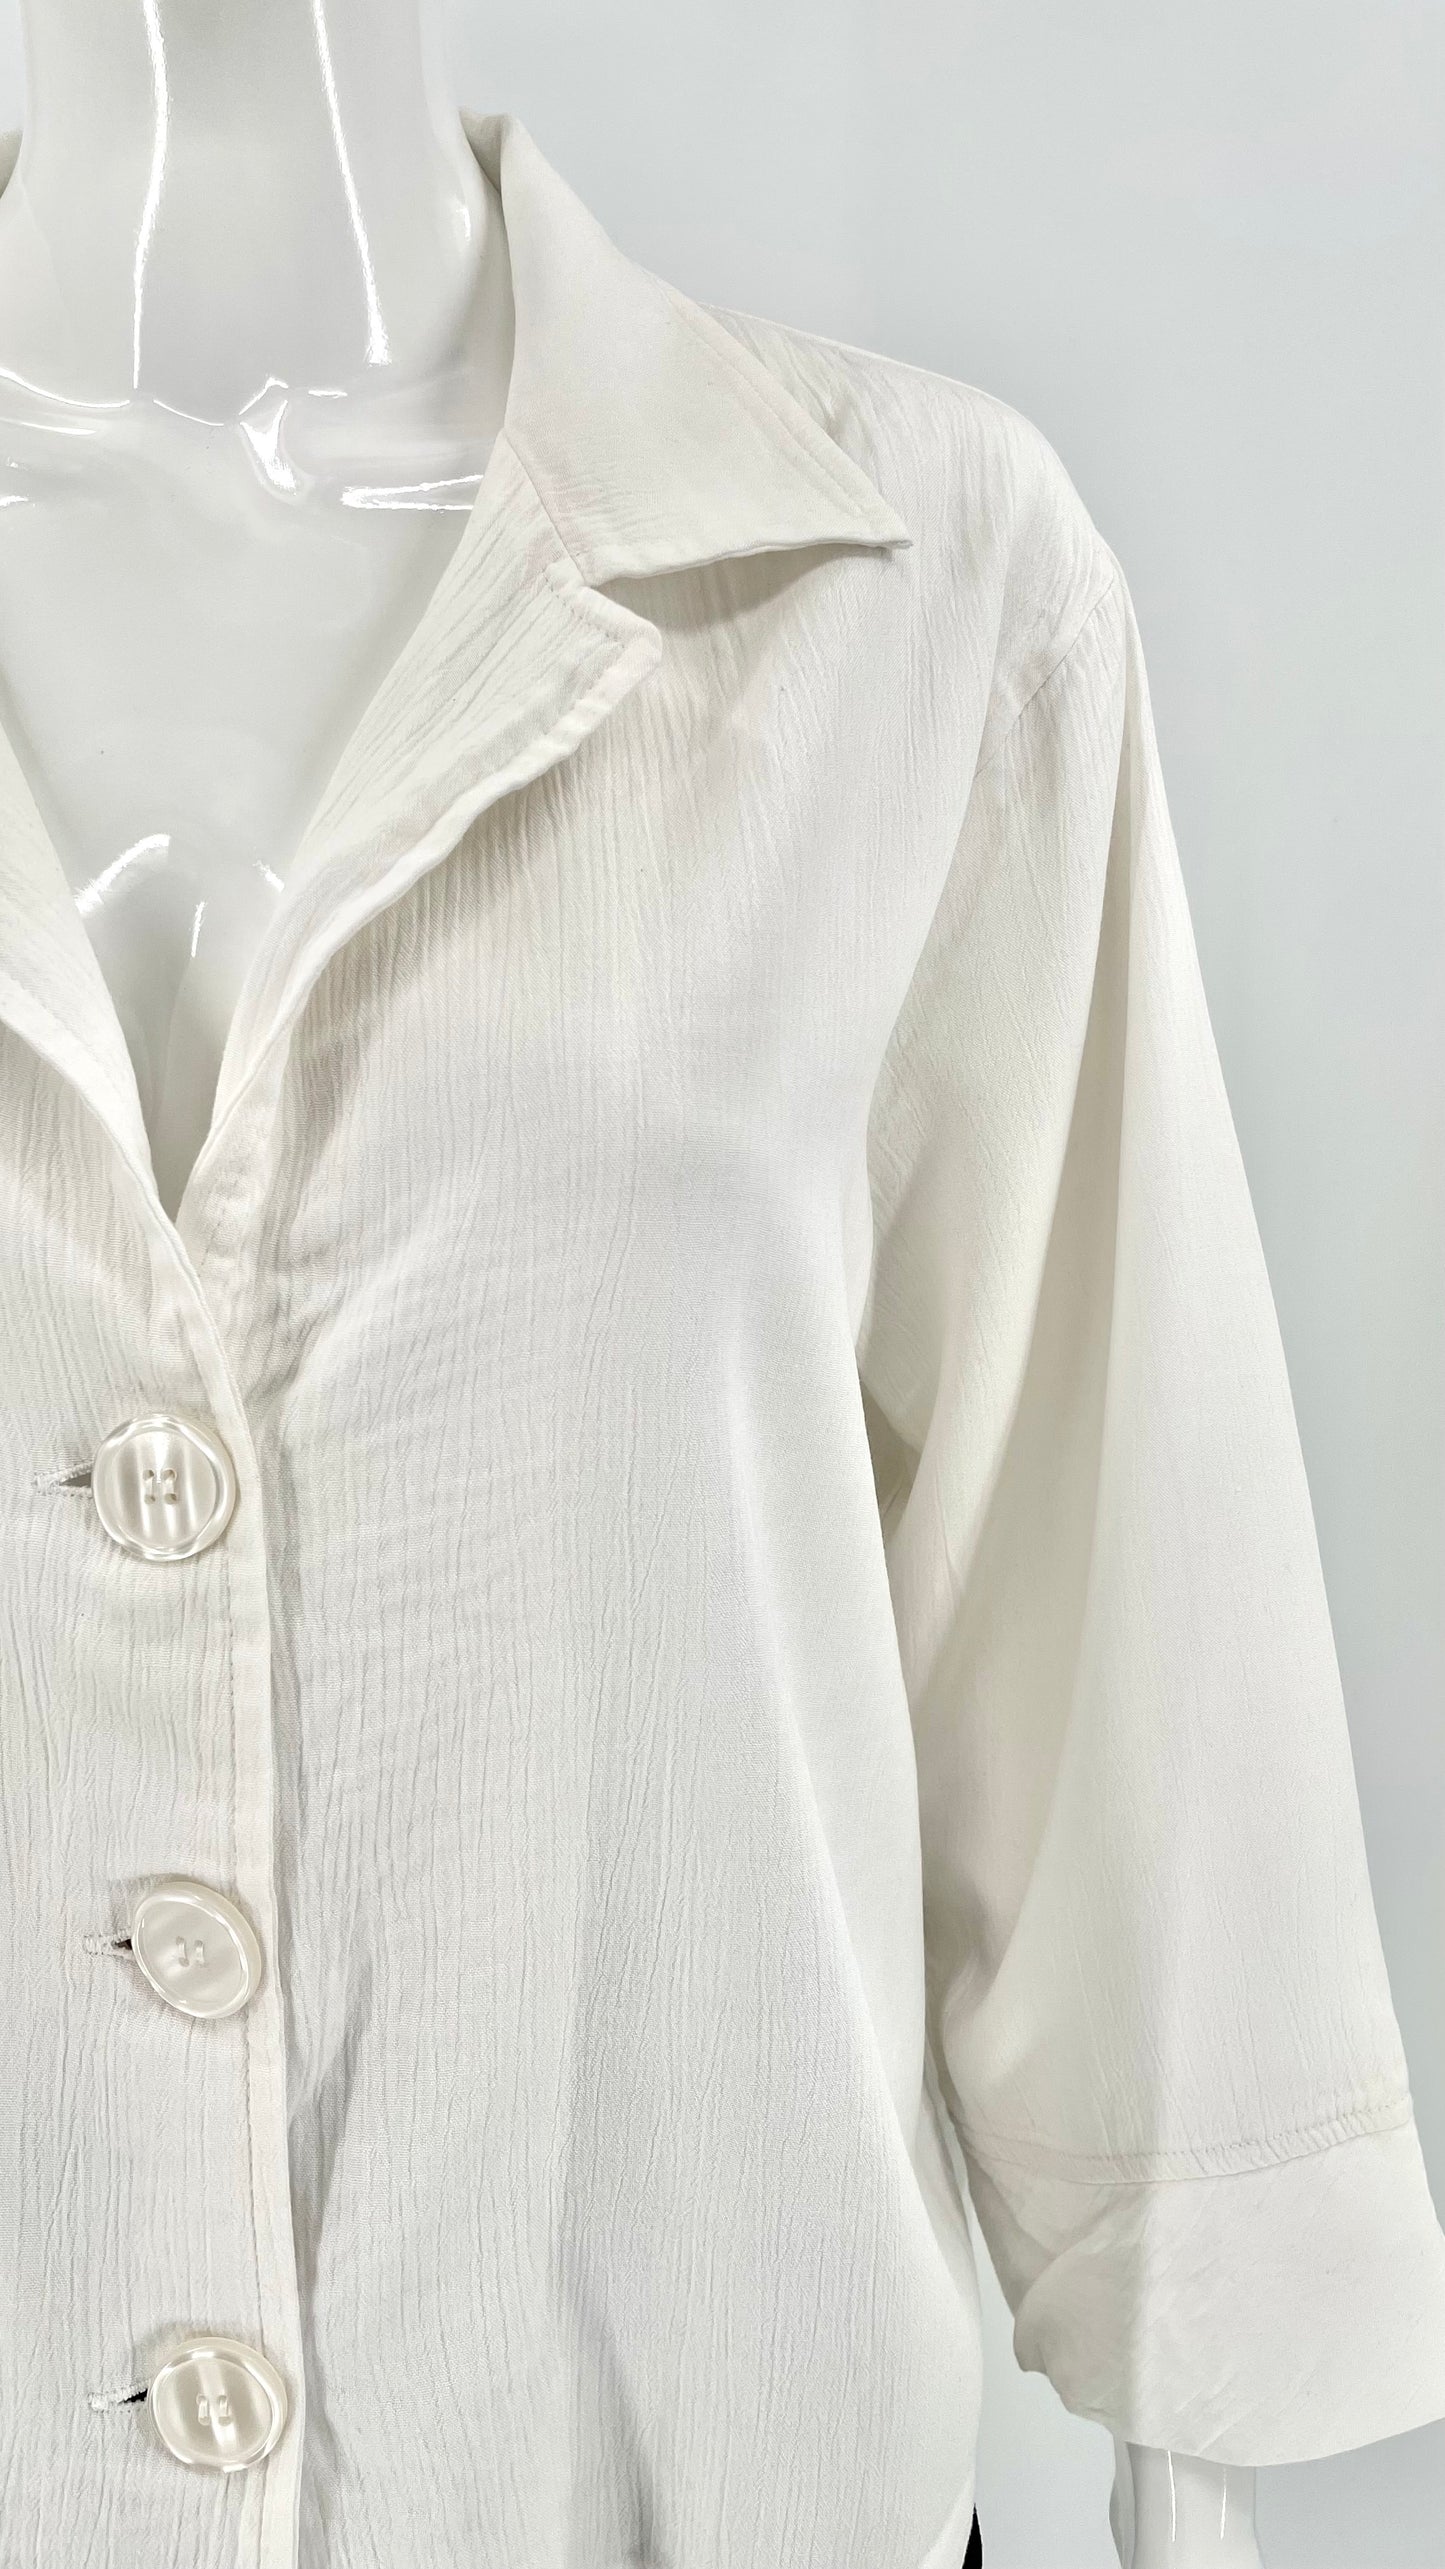 Vintage 90s white textured button up shirt - Size XL